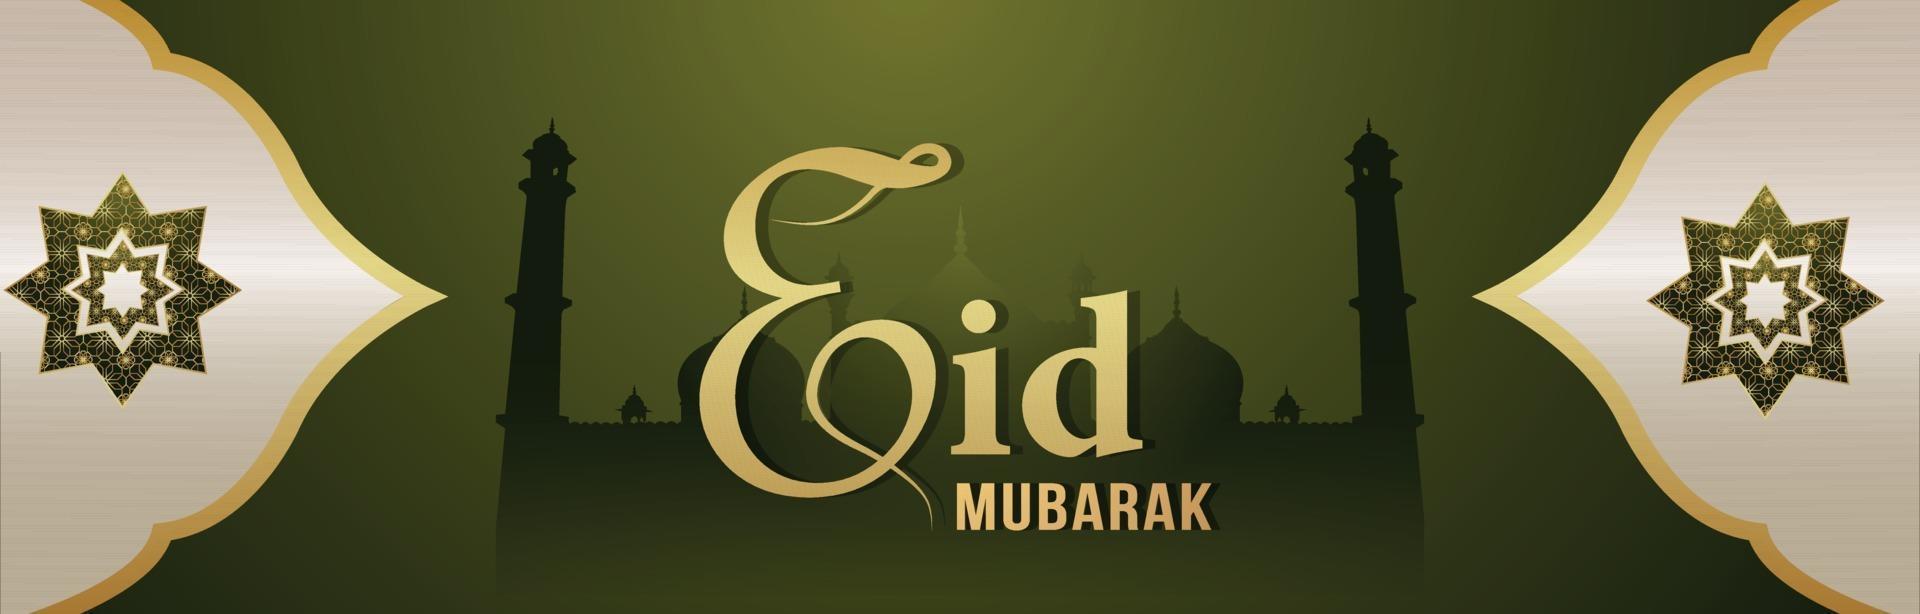 Eid mubarak indian festival celebration banner with arabic golden lantern vector